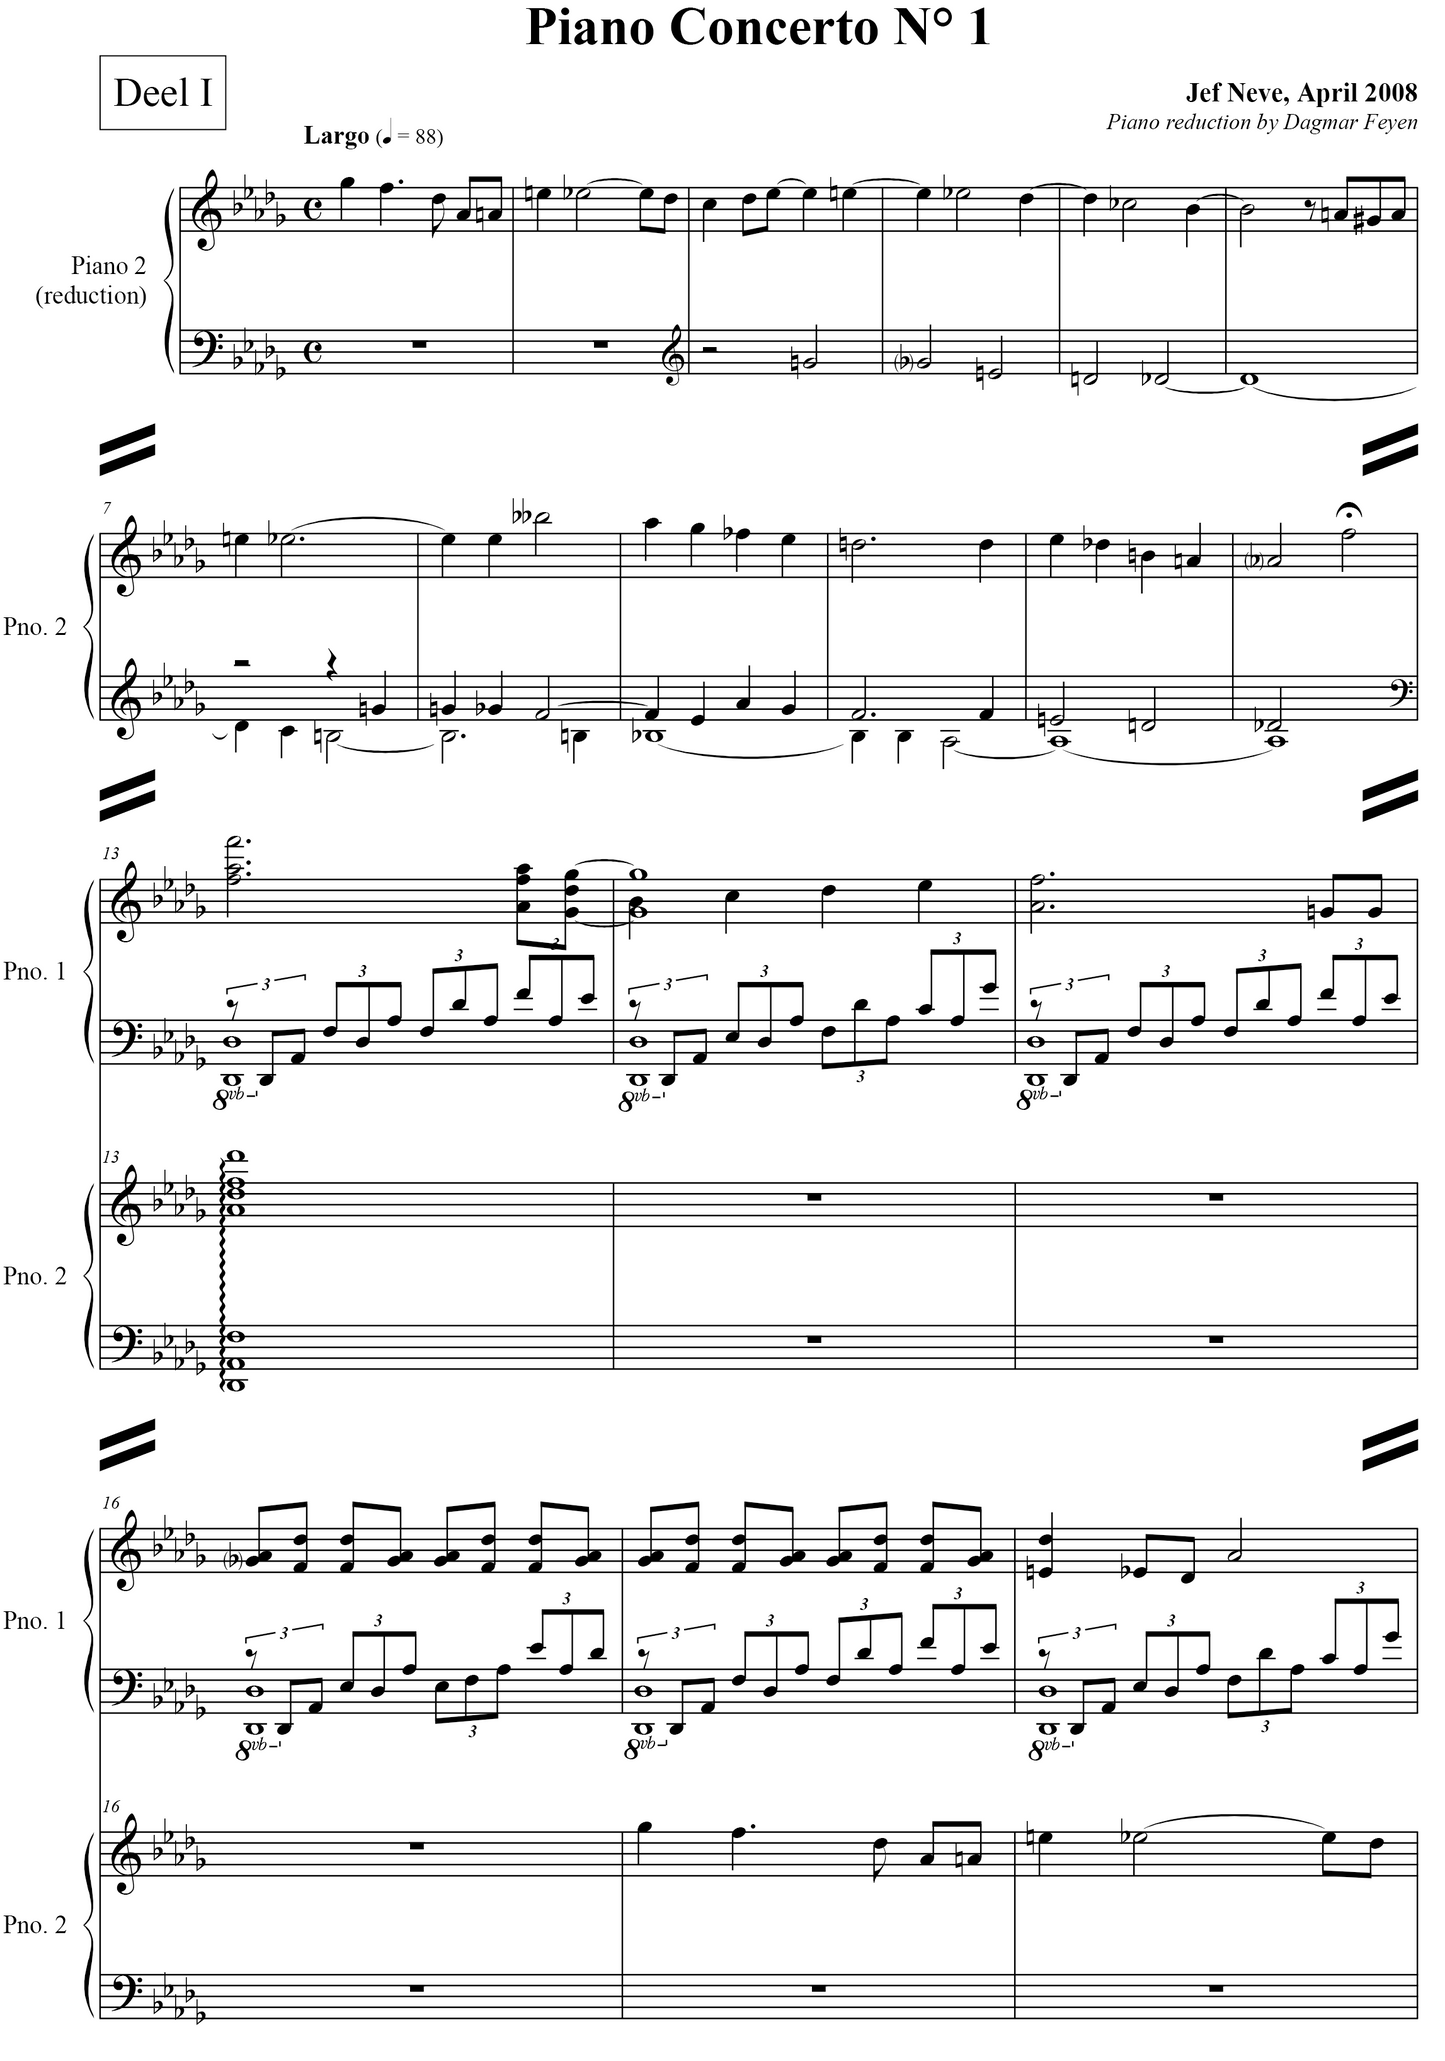 1st pianoconcerto reduction 2 pianos